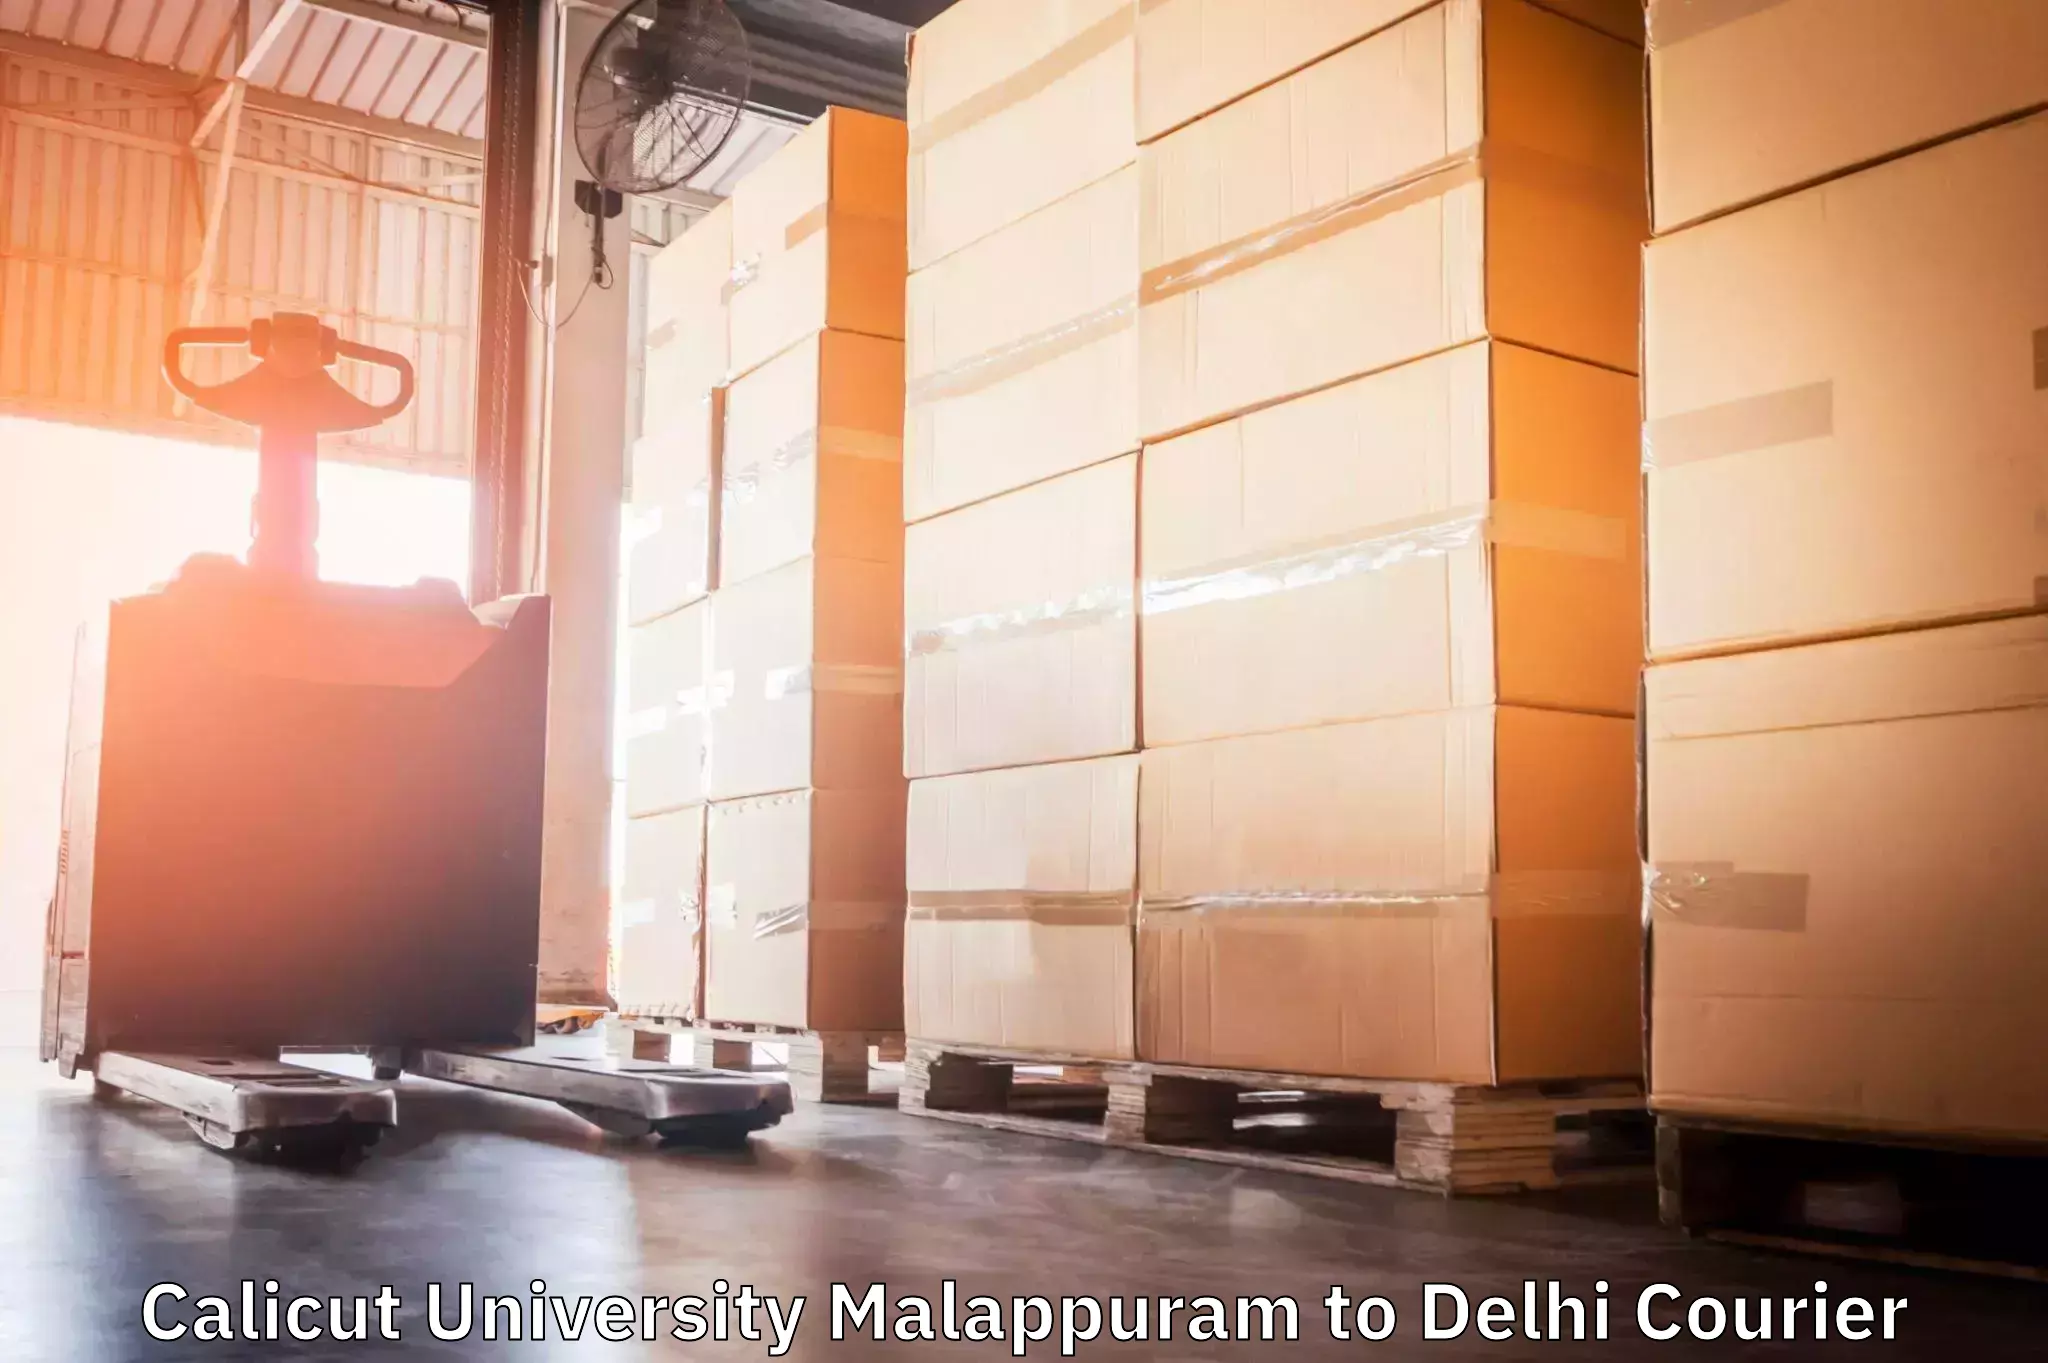 Package delivery network Calicut University Malappuram to Krishna Nagar